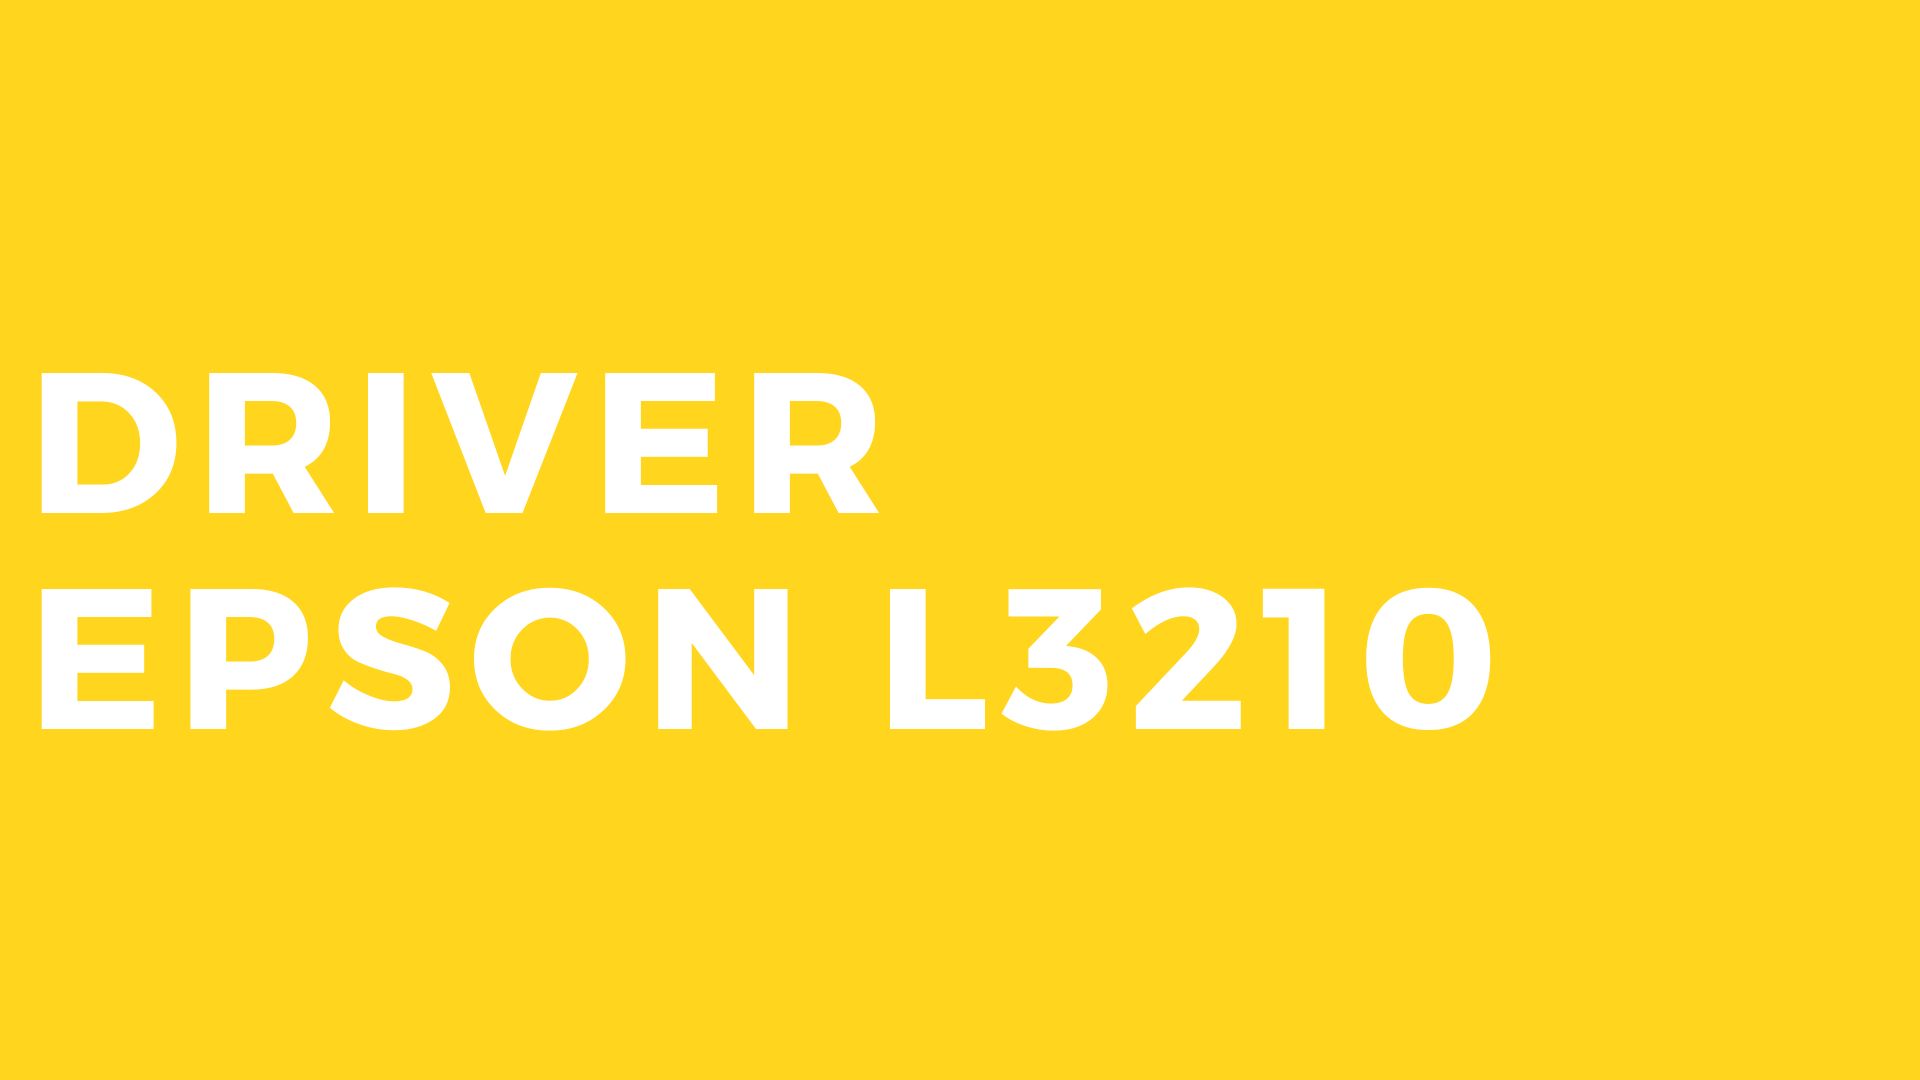 Download driver epson l3210